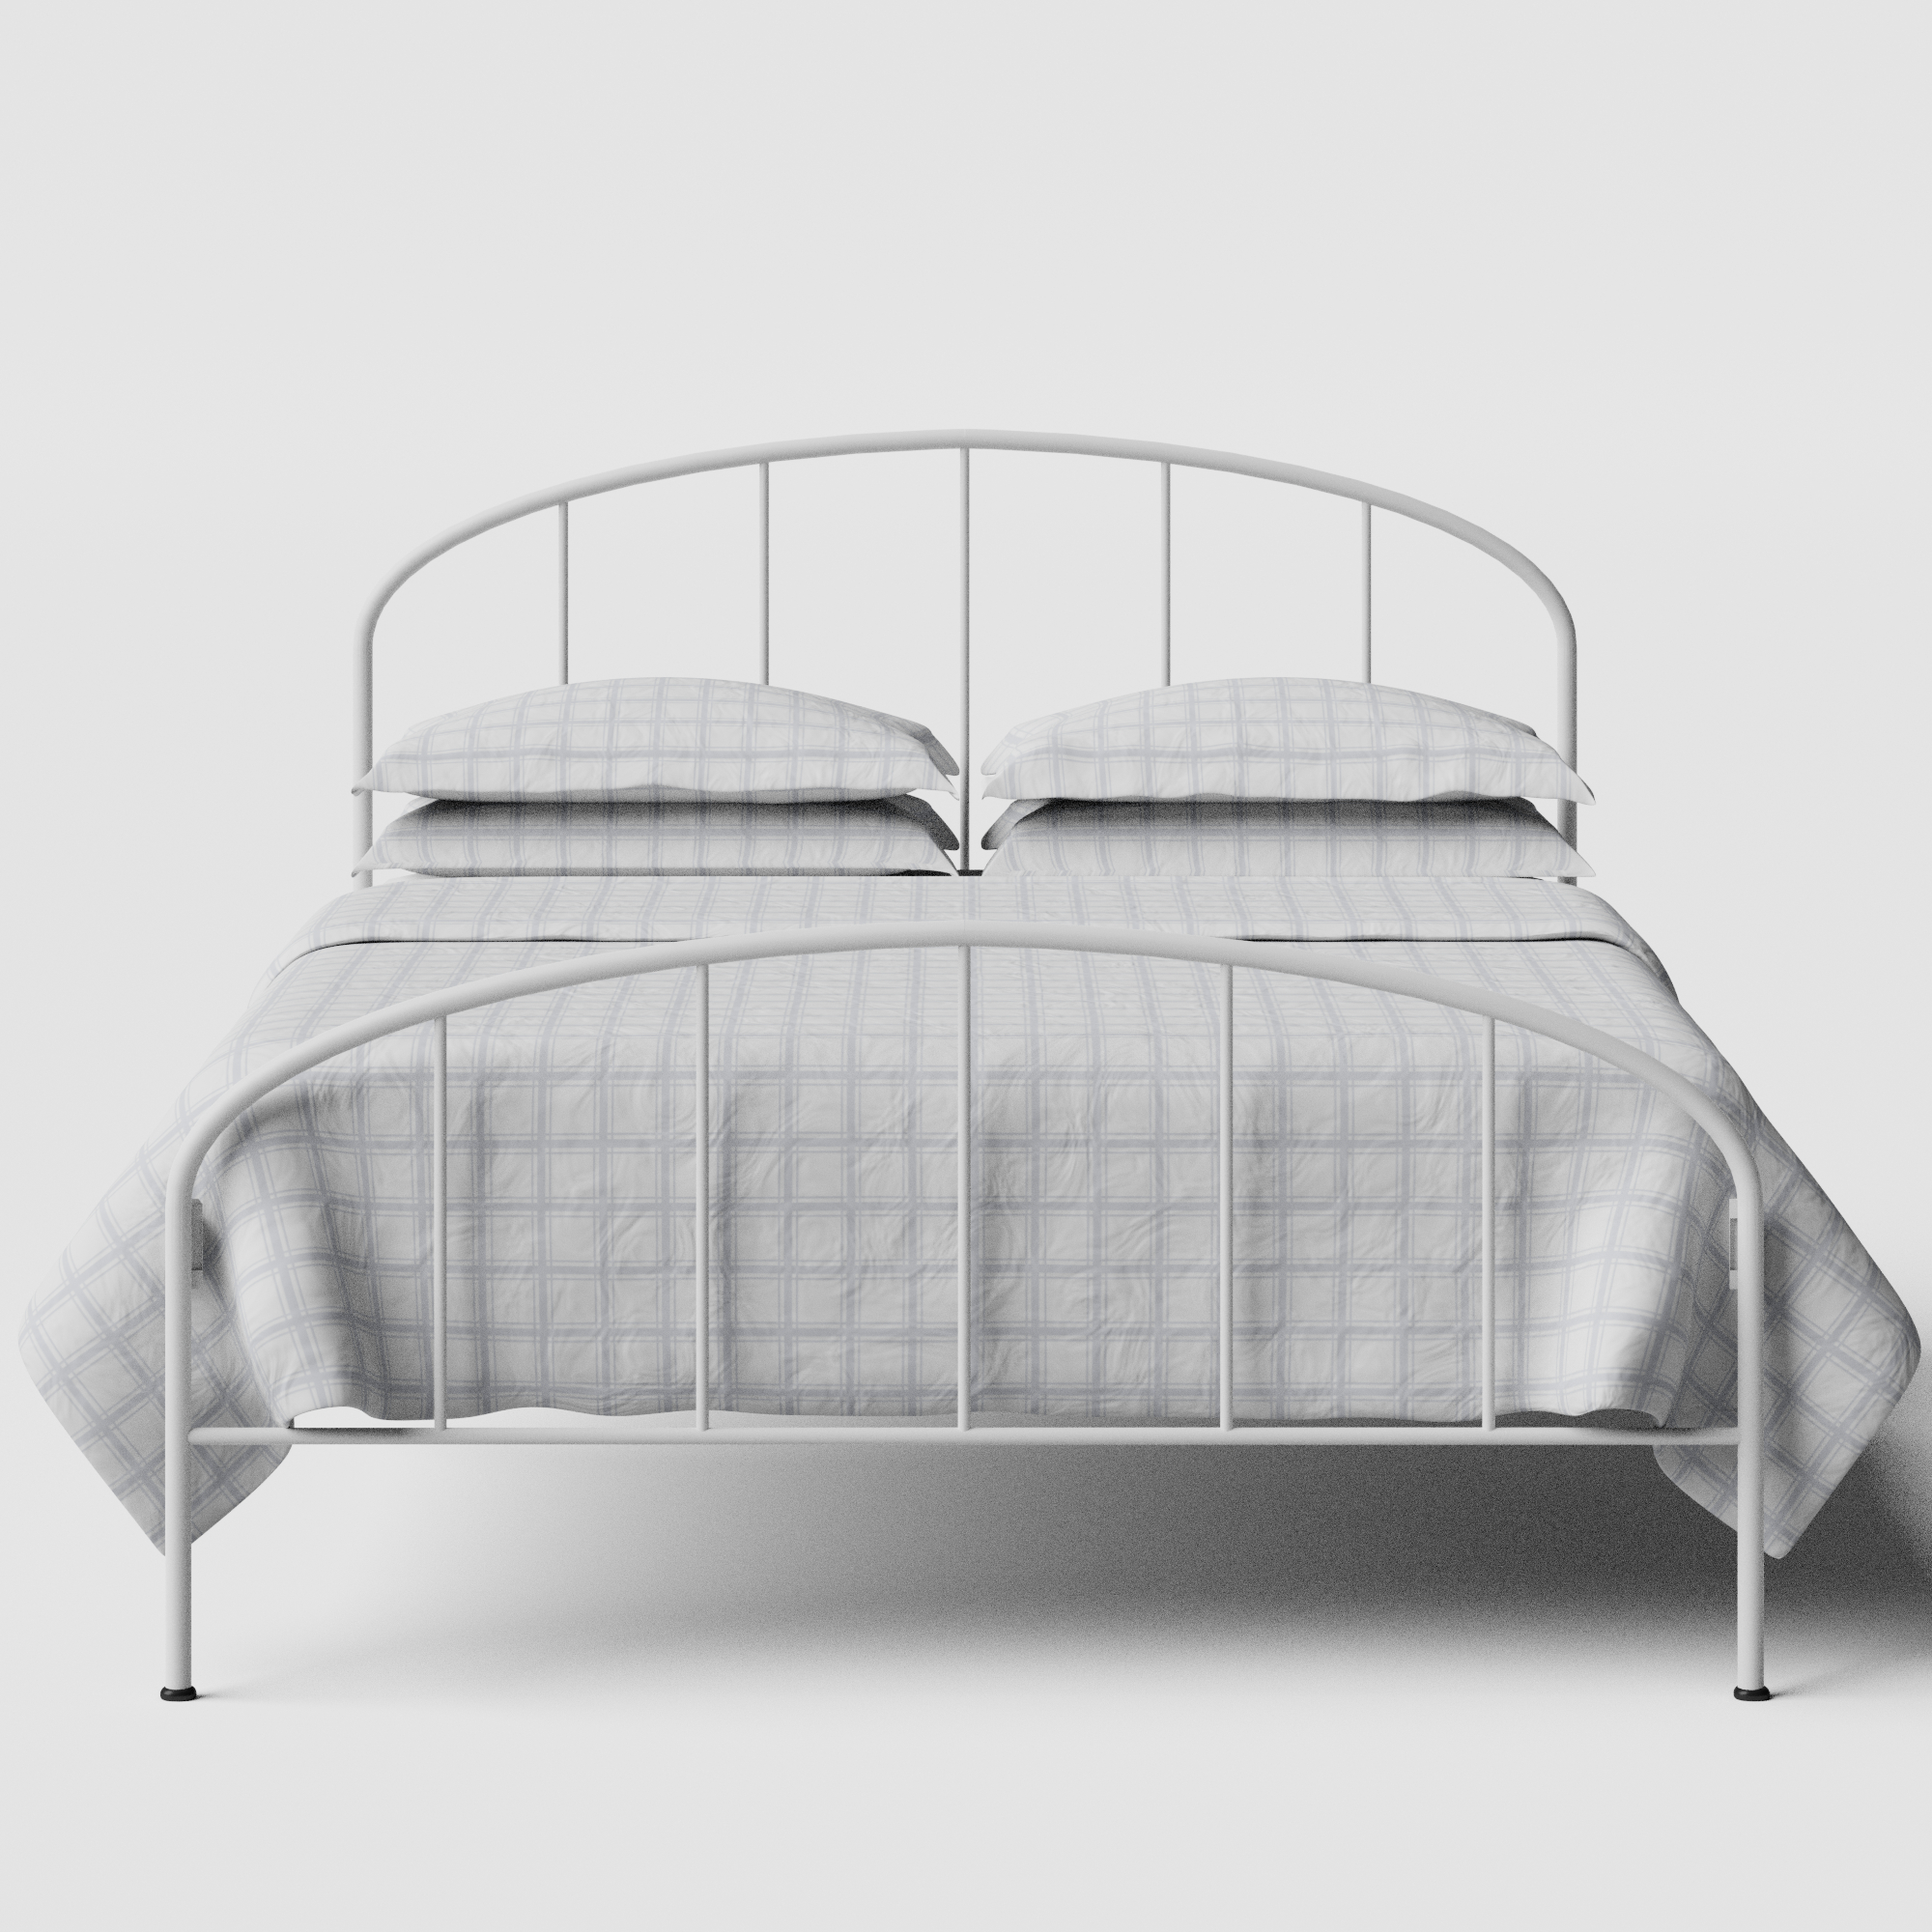 Waldo iron/metal bed in white